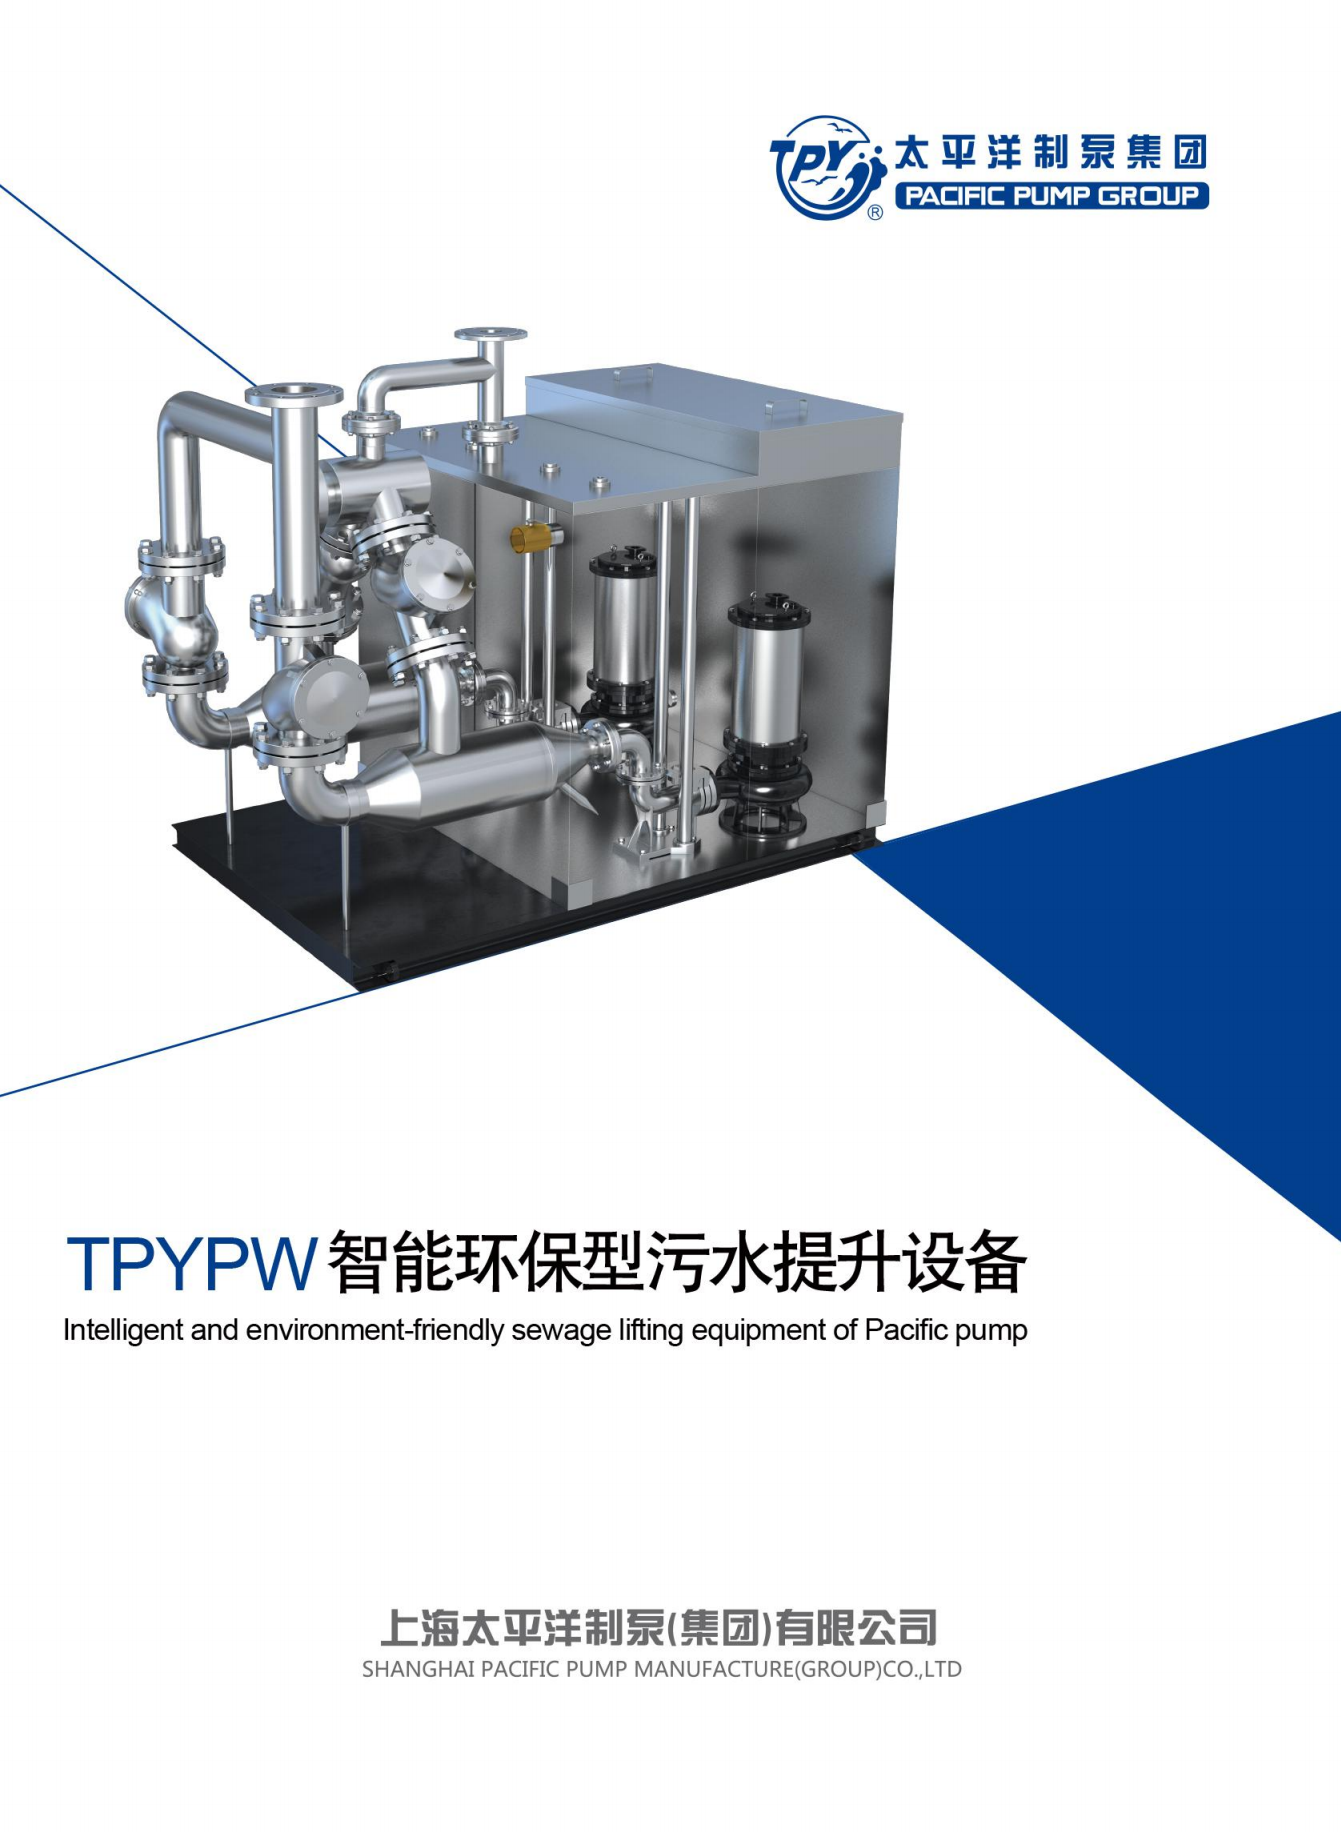 TPYPW智能環保型污水提升設備